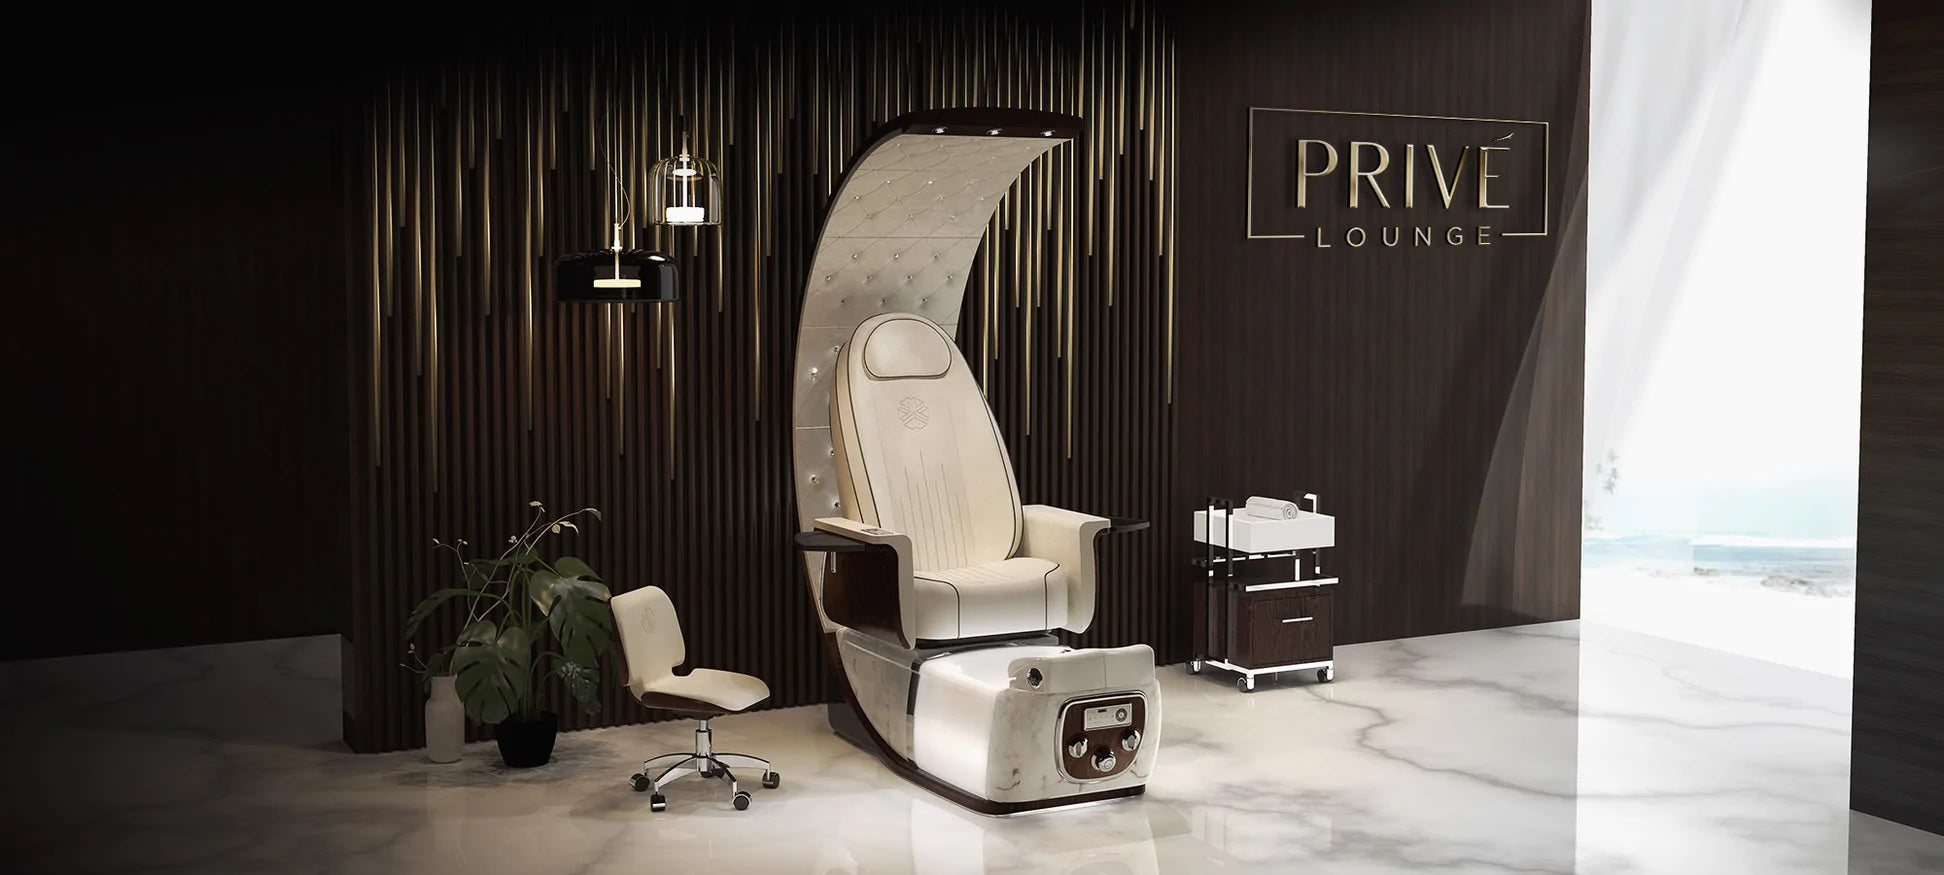 PRIVE Lounge Pedicure Chair